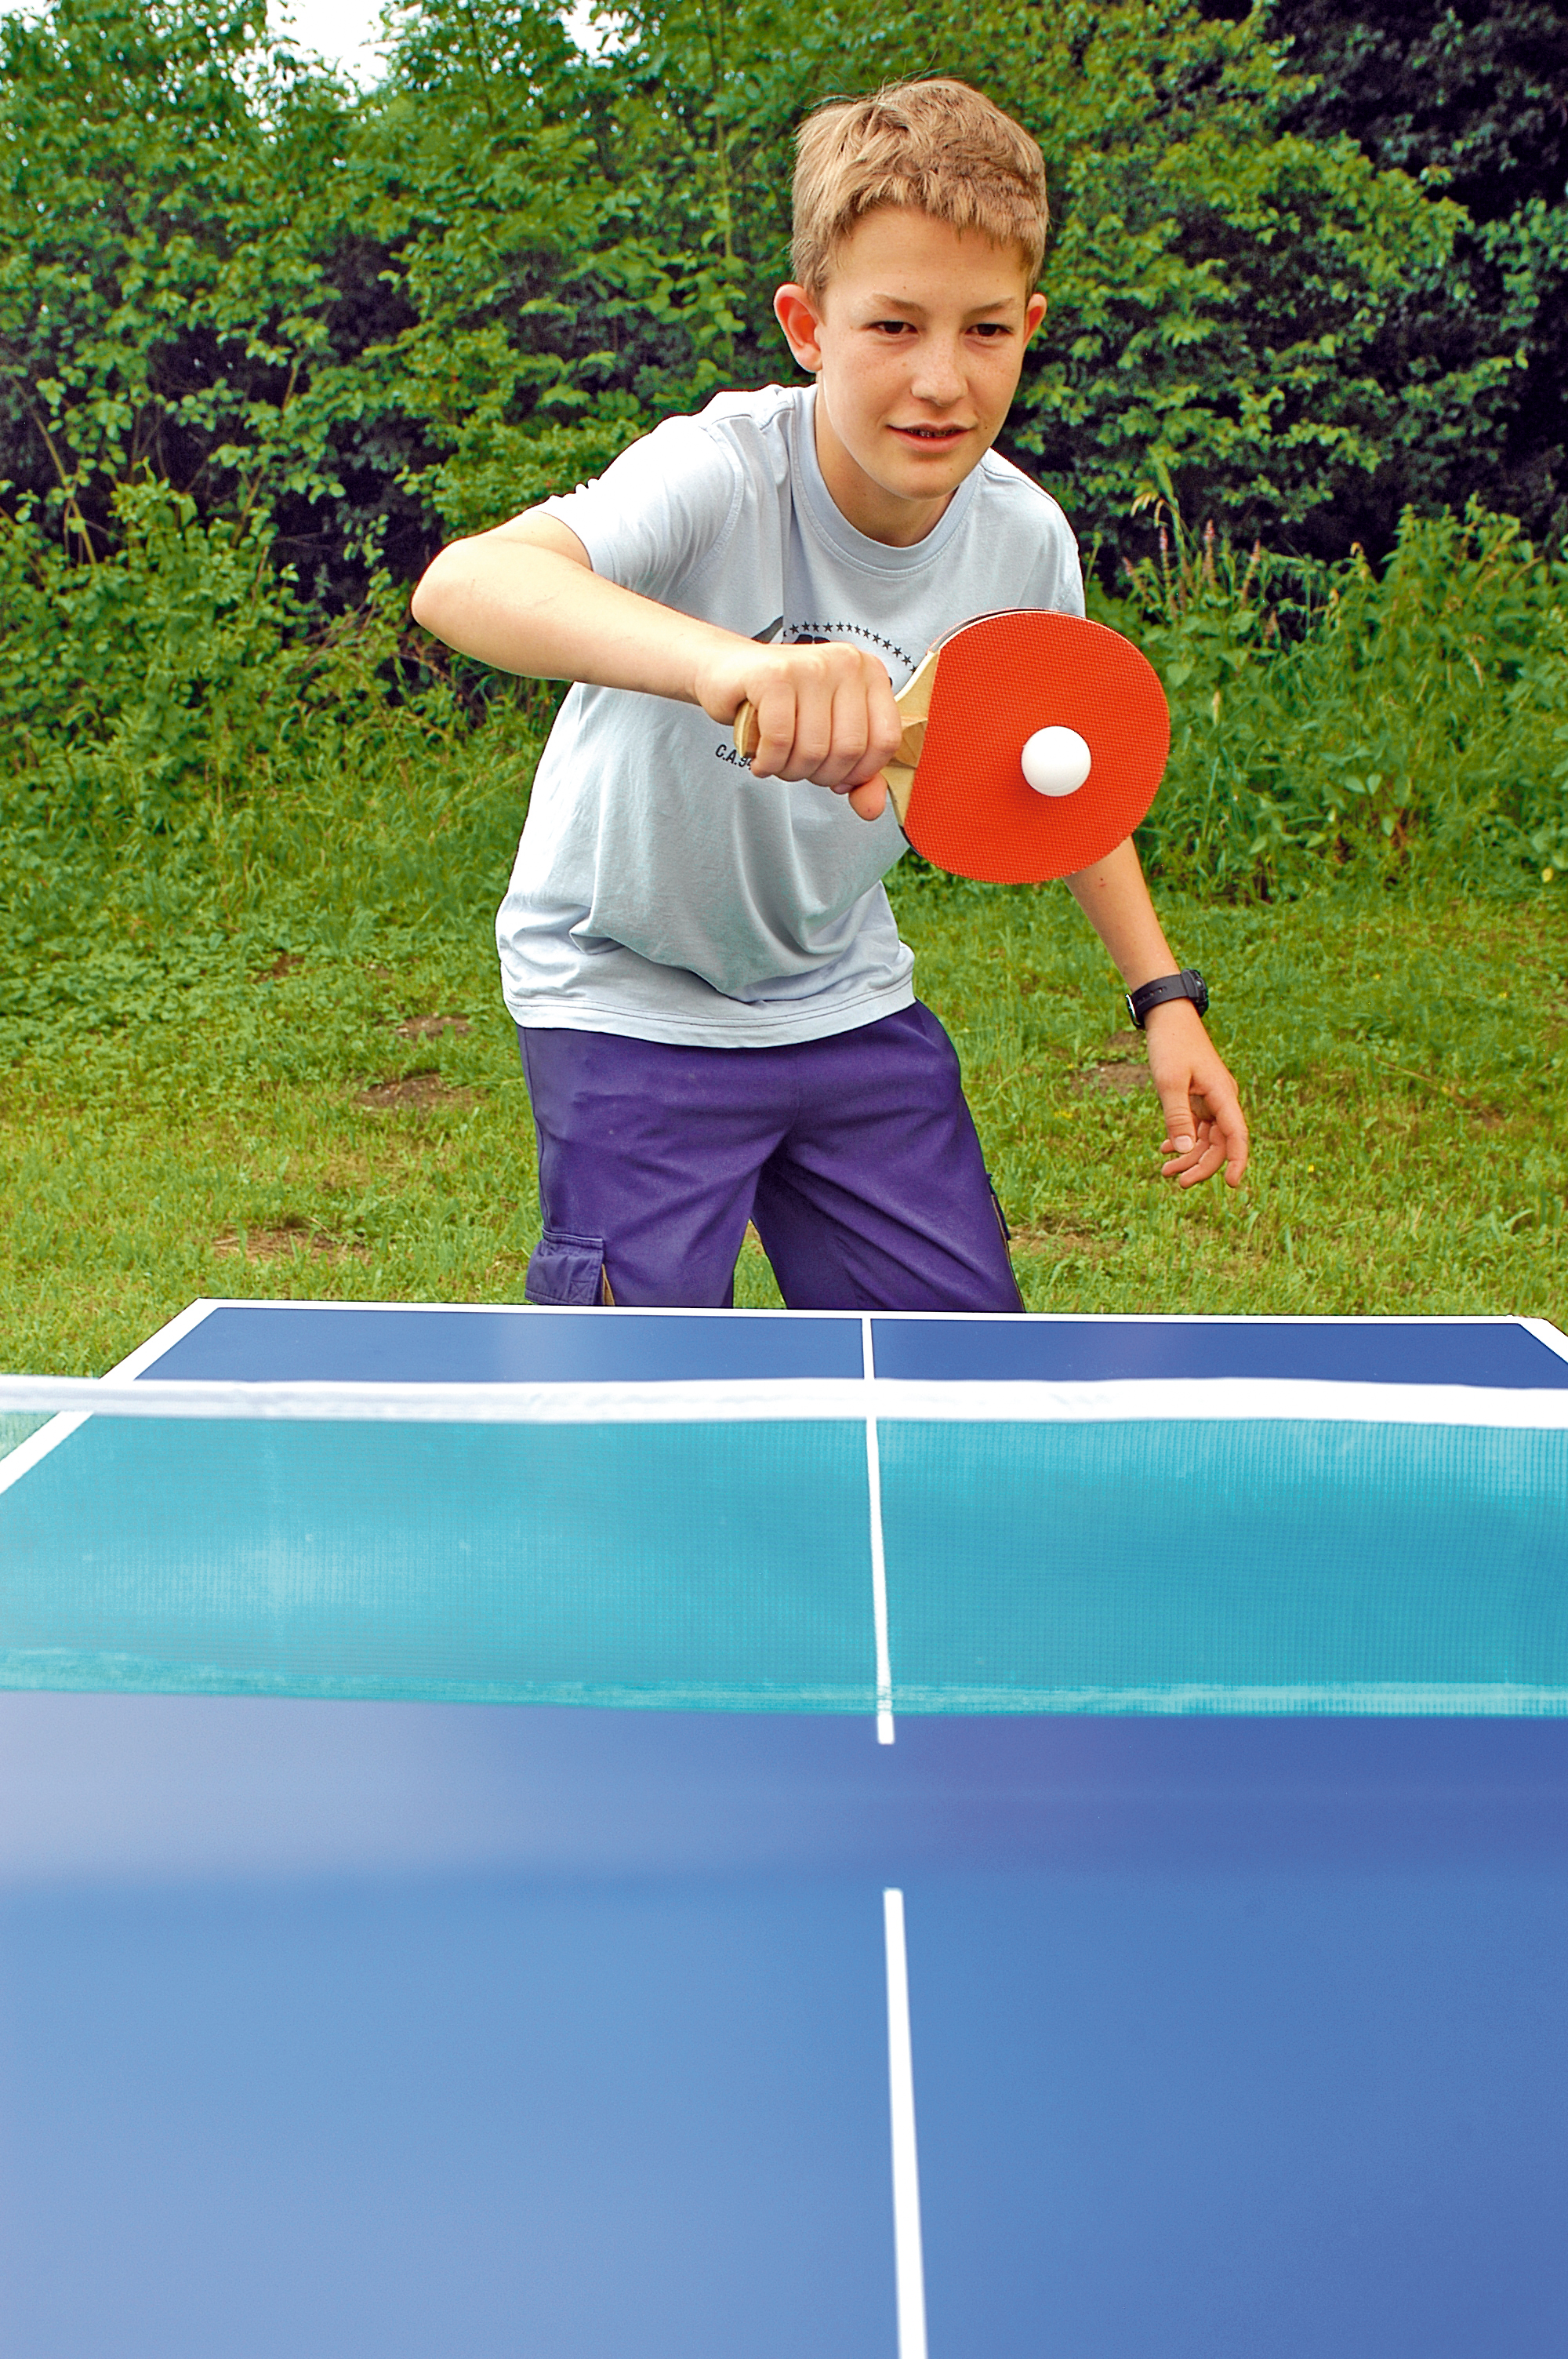 Cornilleau Mini Ping-Pong table